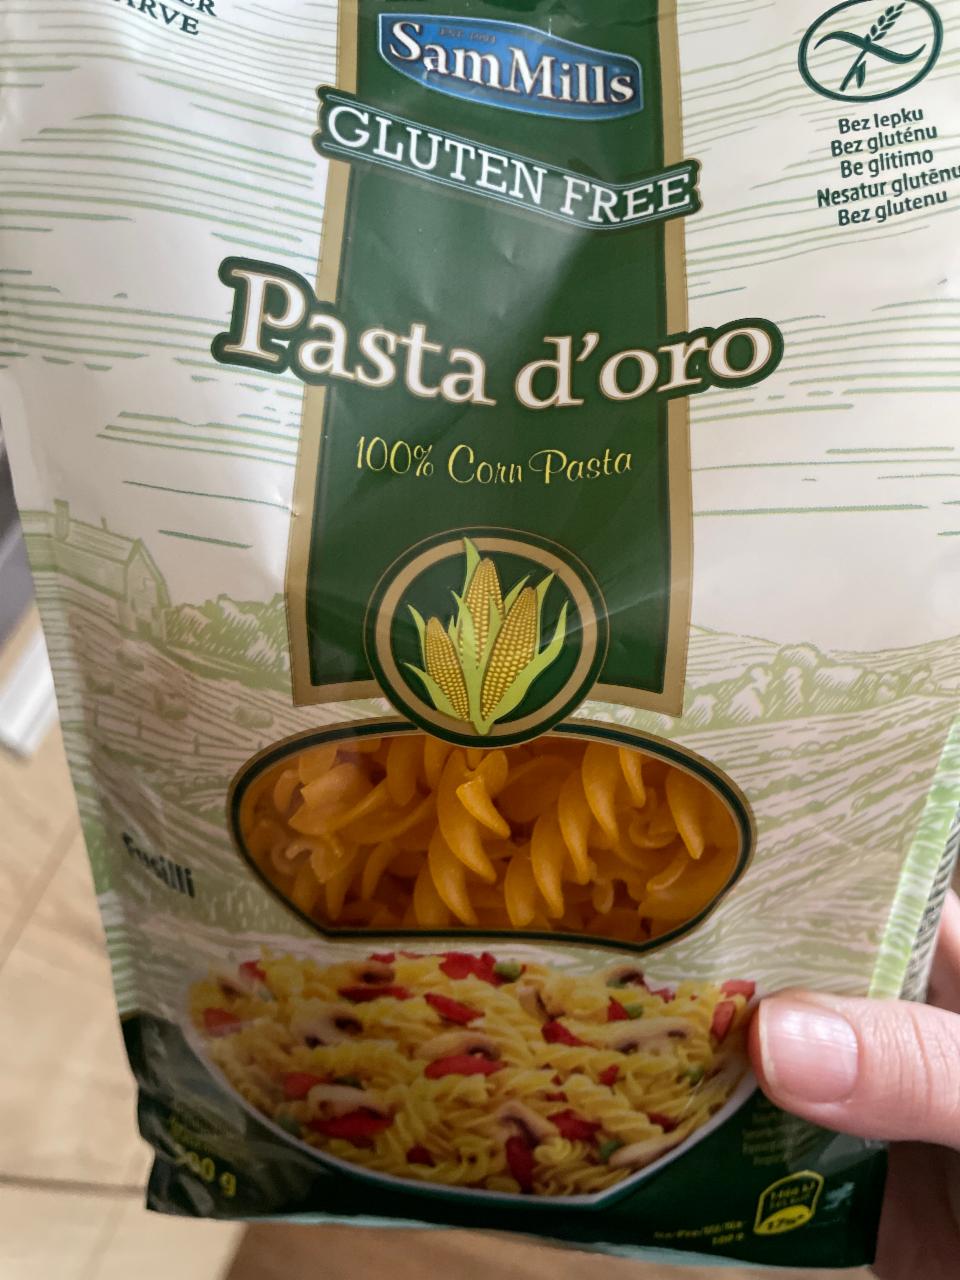 Fotografie - Penne 100% Corn Pasta d'oro Gluten free SamMills